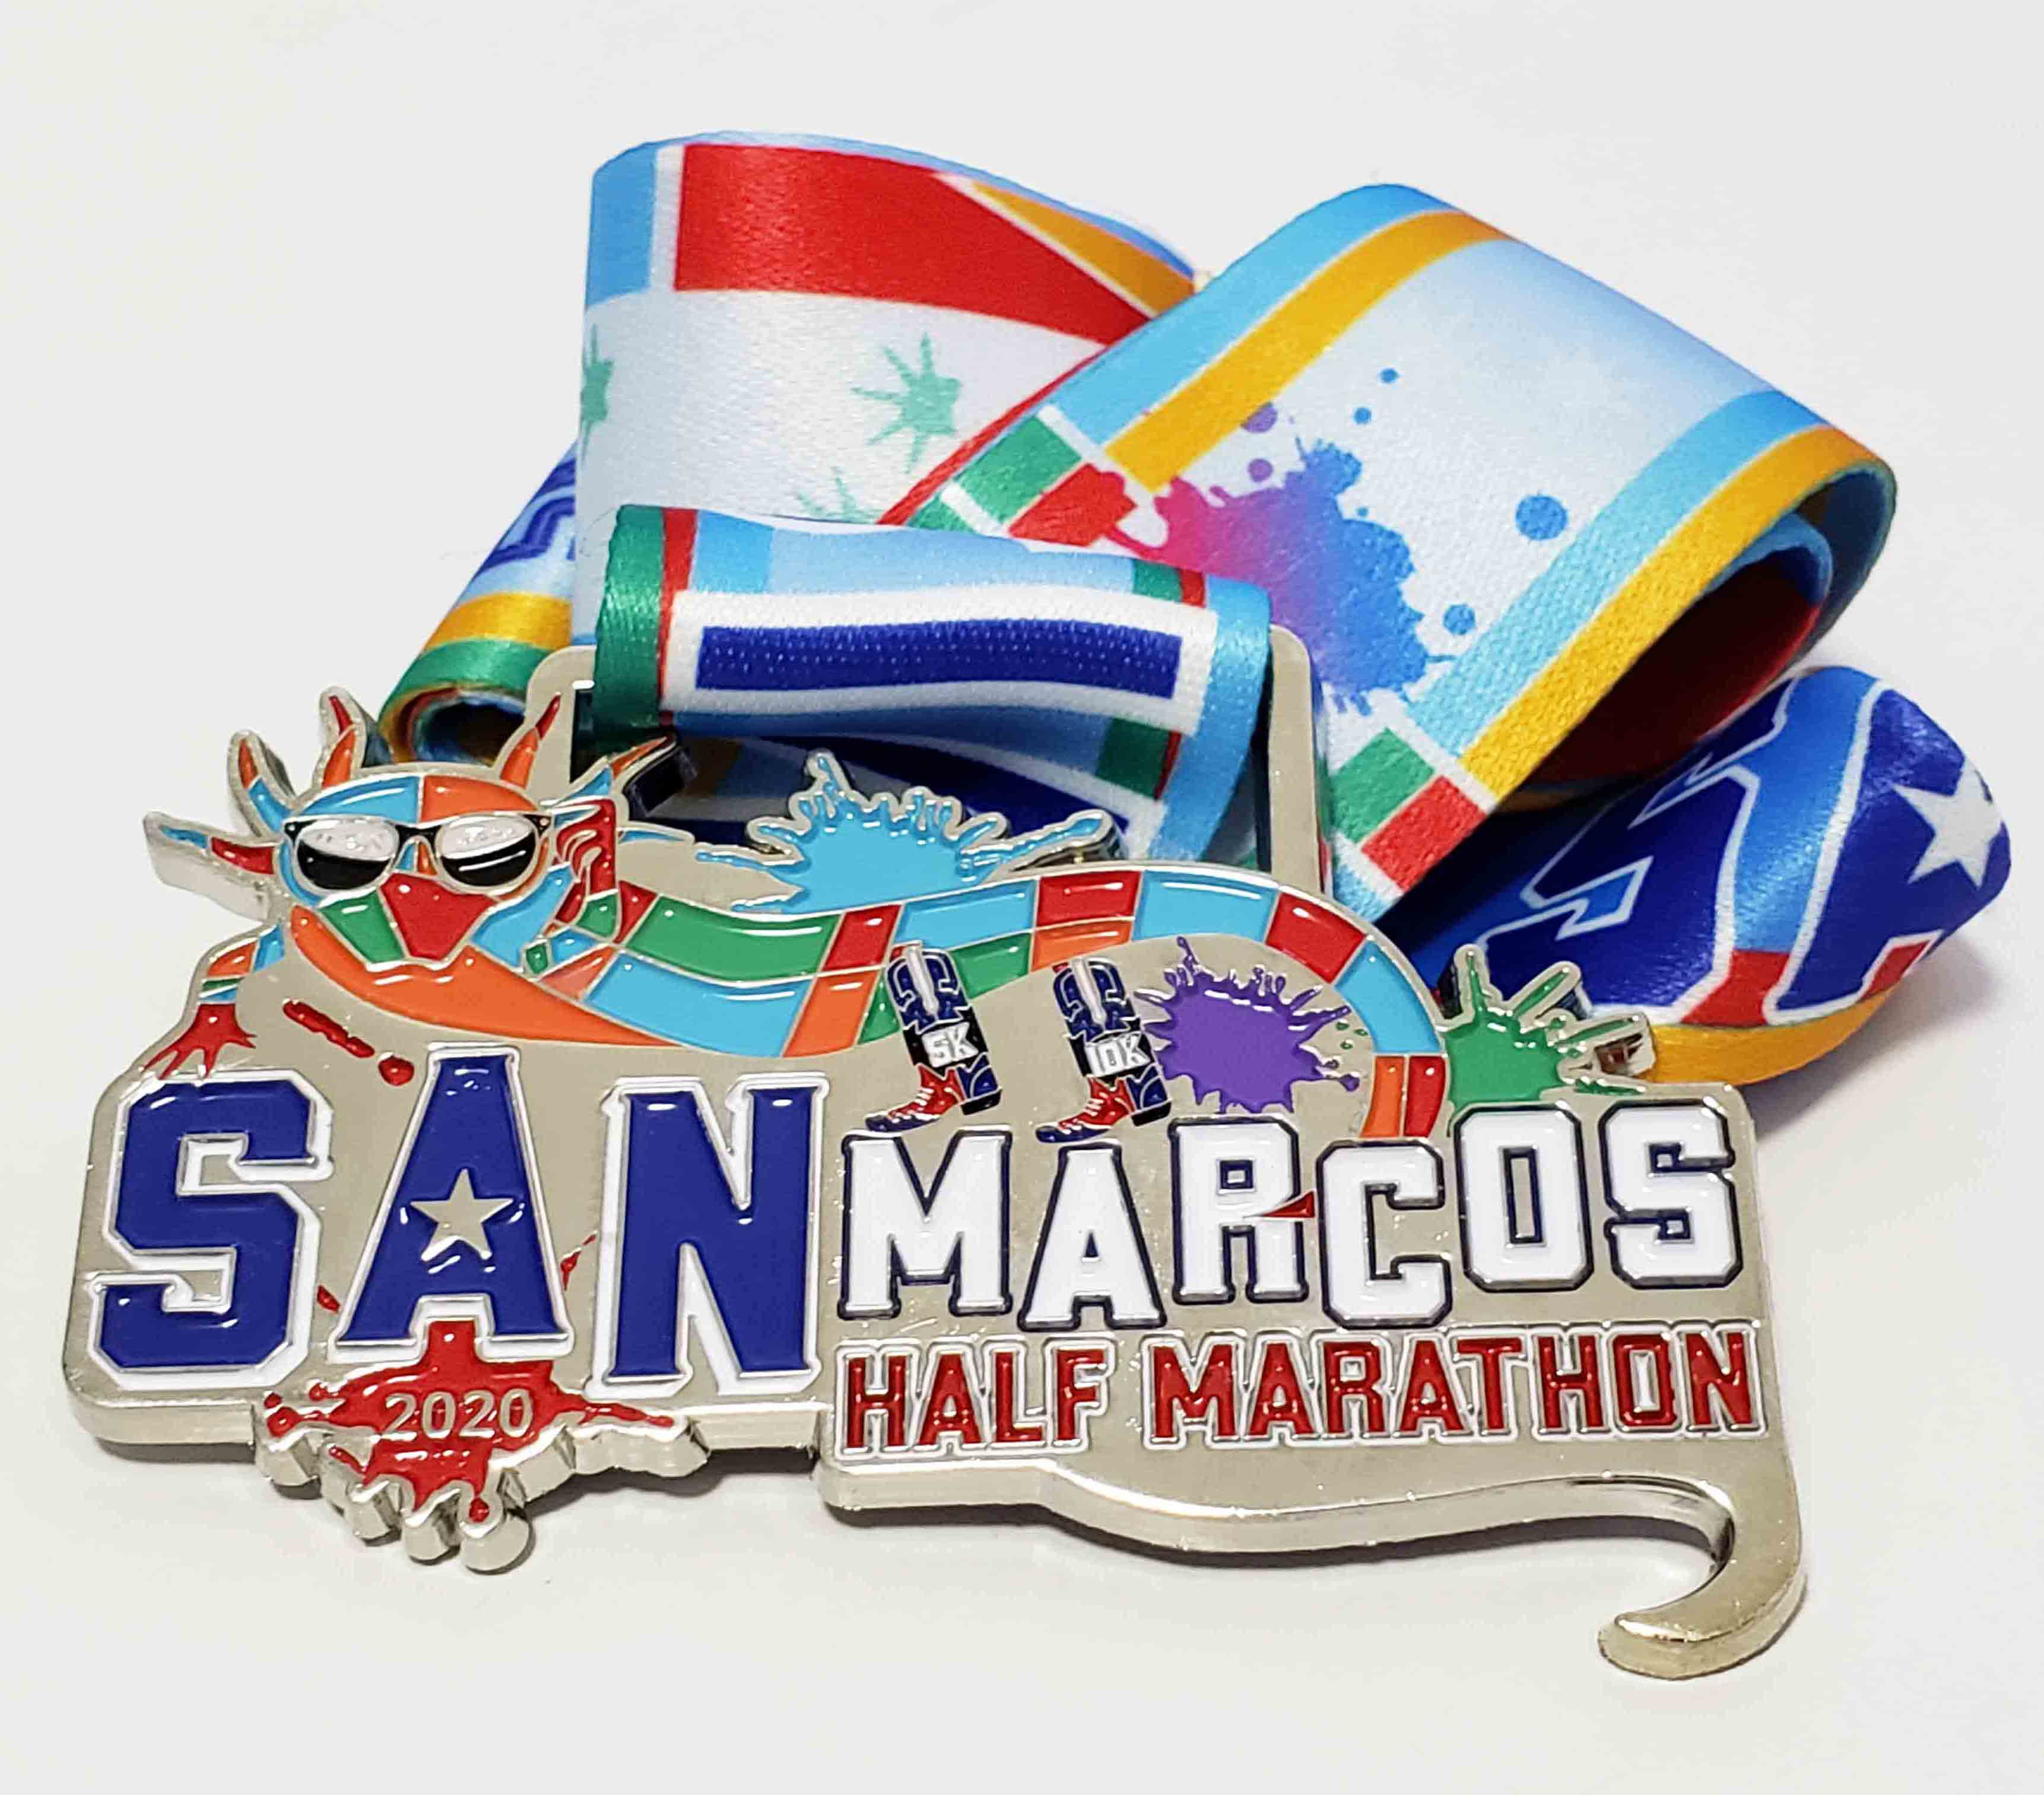 2020 half marathon medal